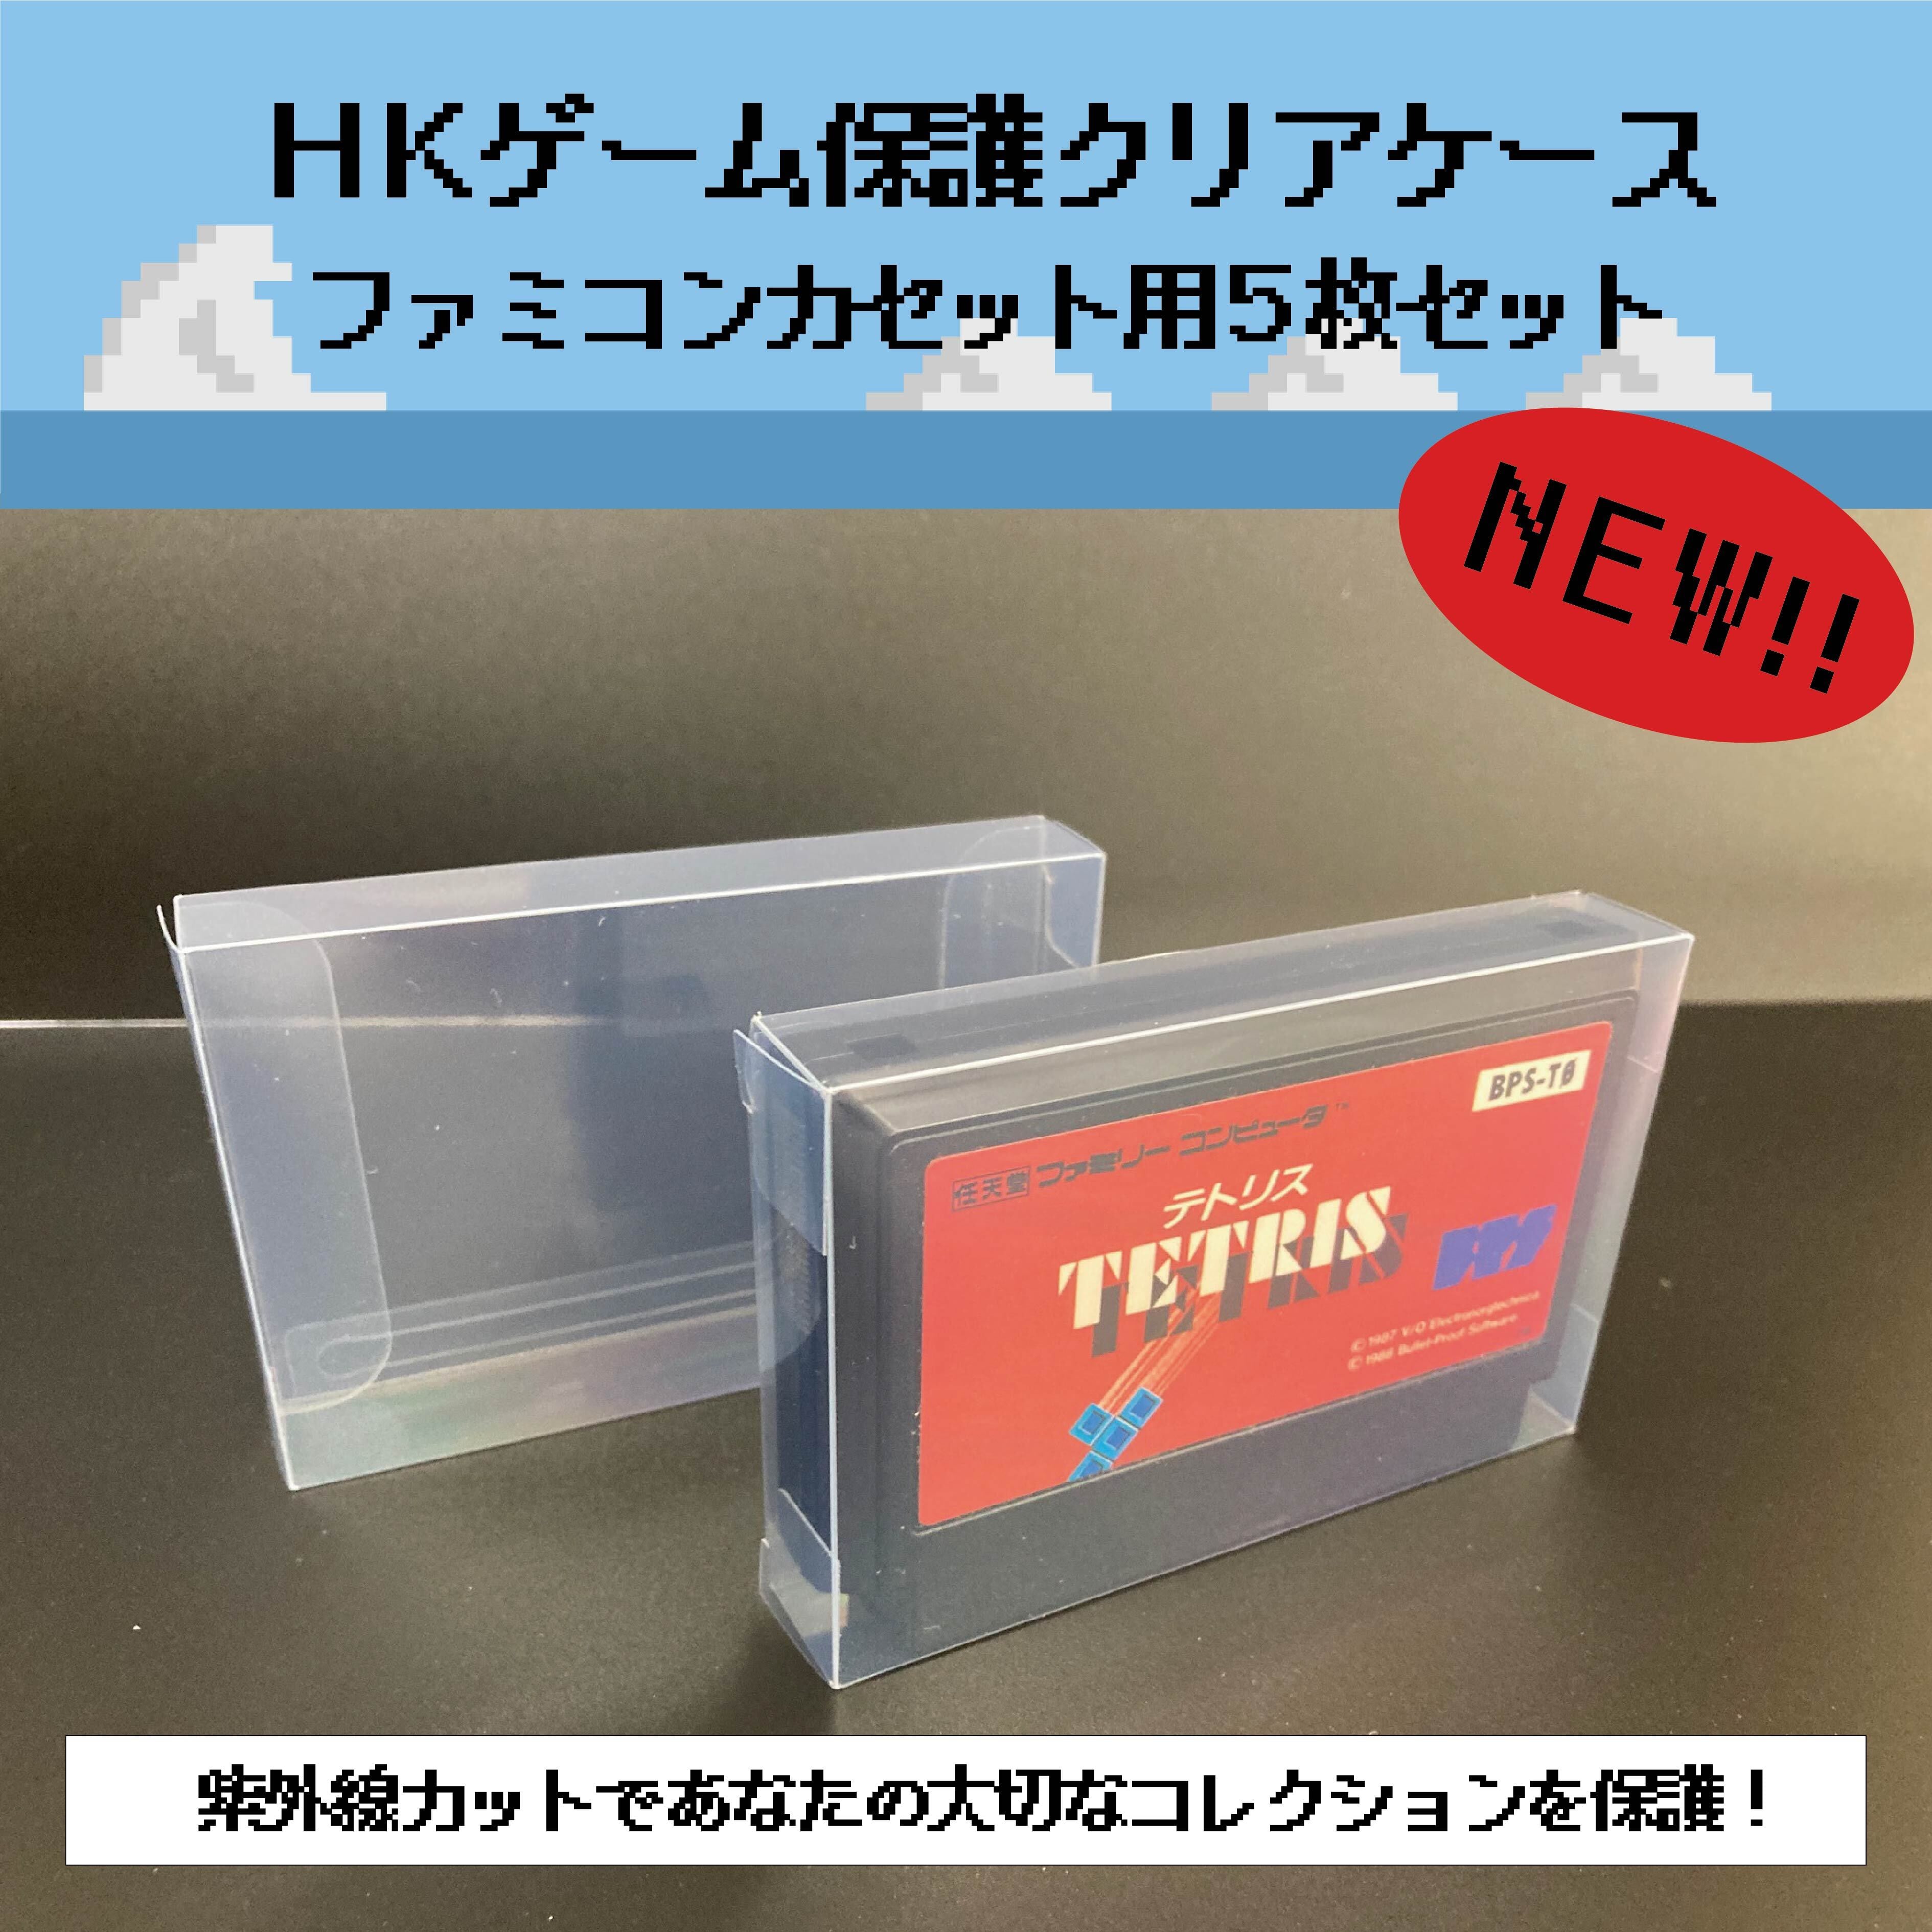 HKゲーム保護クリアケース スーパーファミコン カセット用 5枚セット